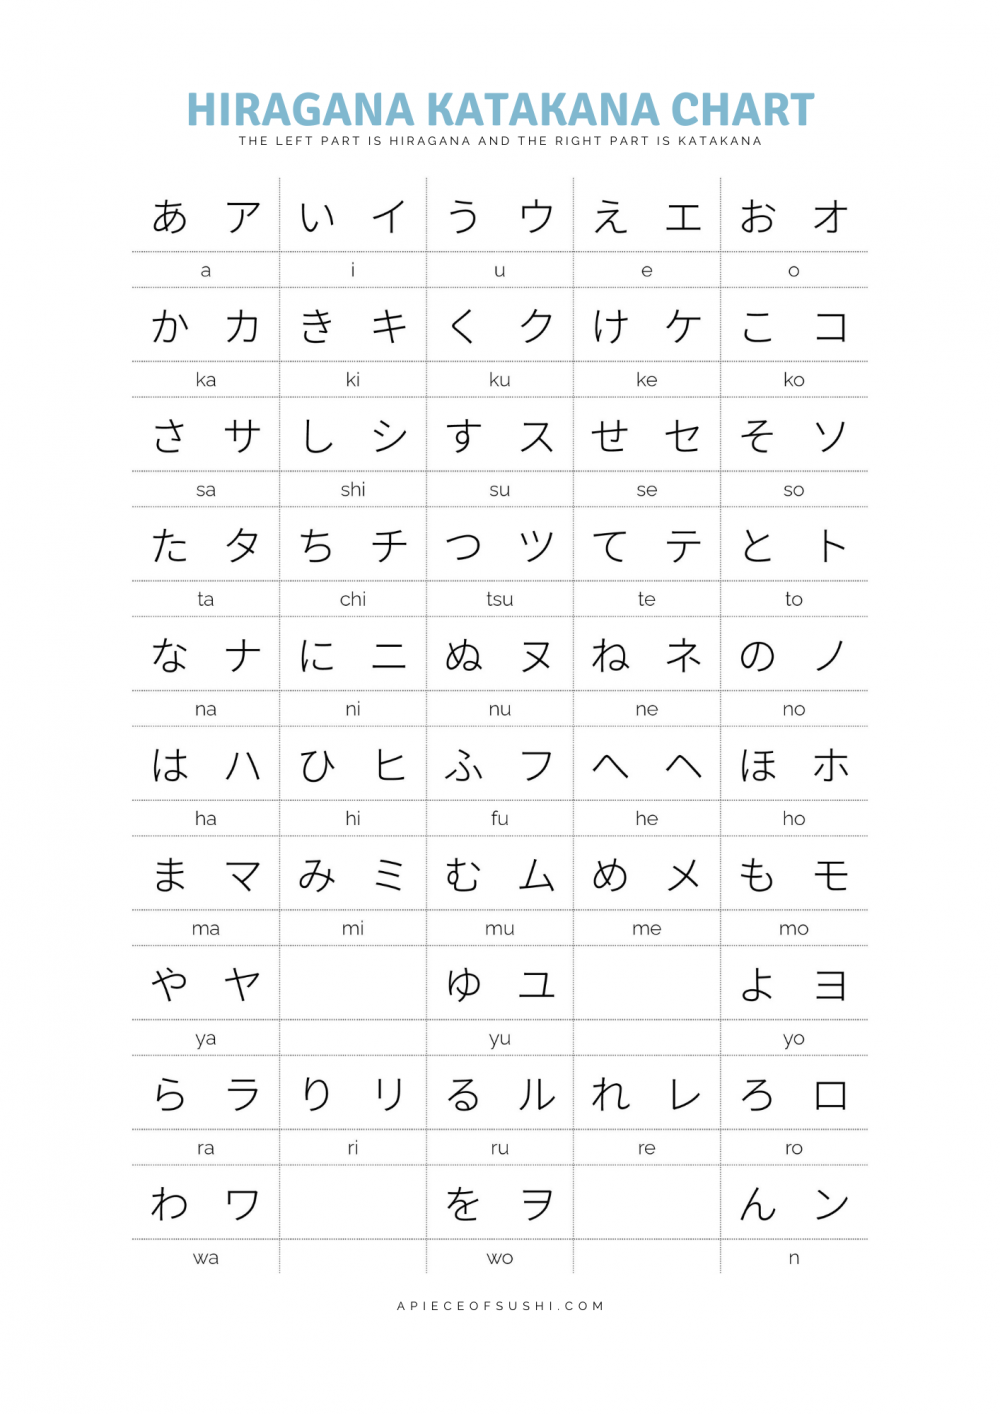 hiragana-katakana-chart-free-download-printable-pdf-with-3-riset